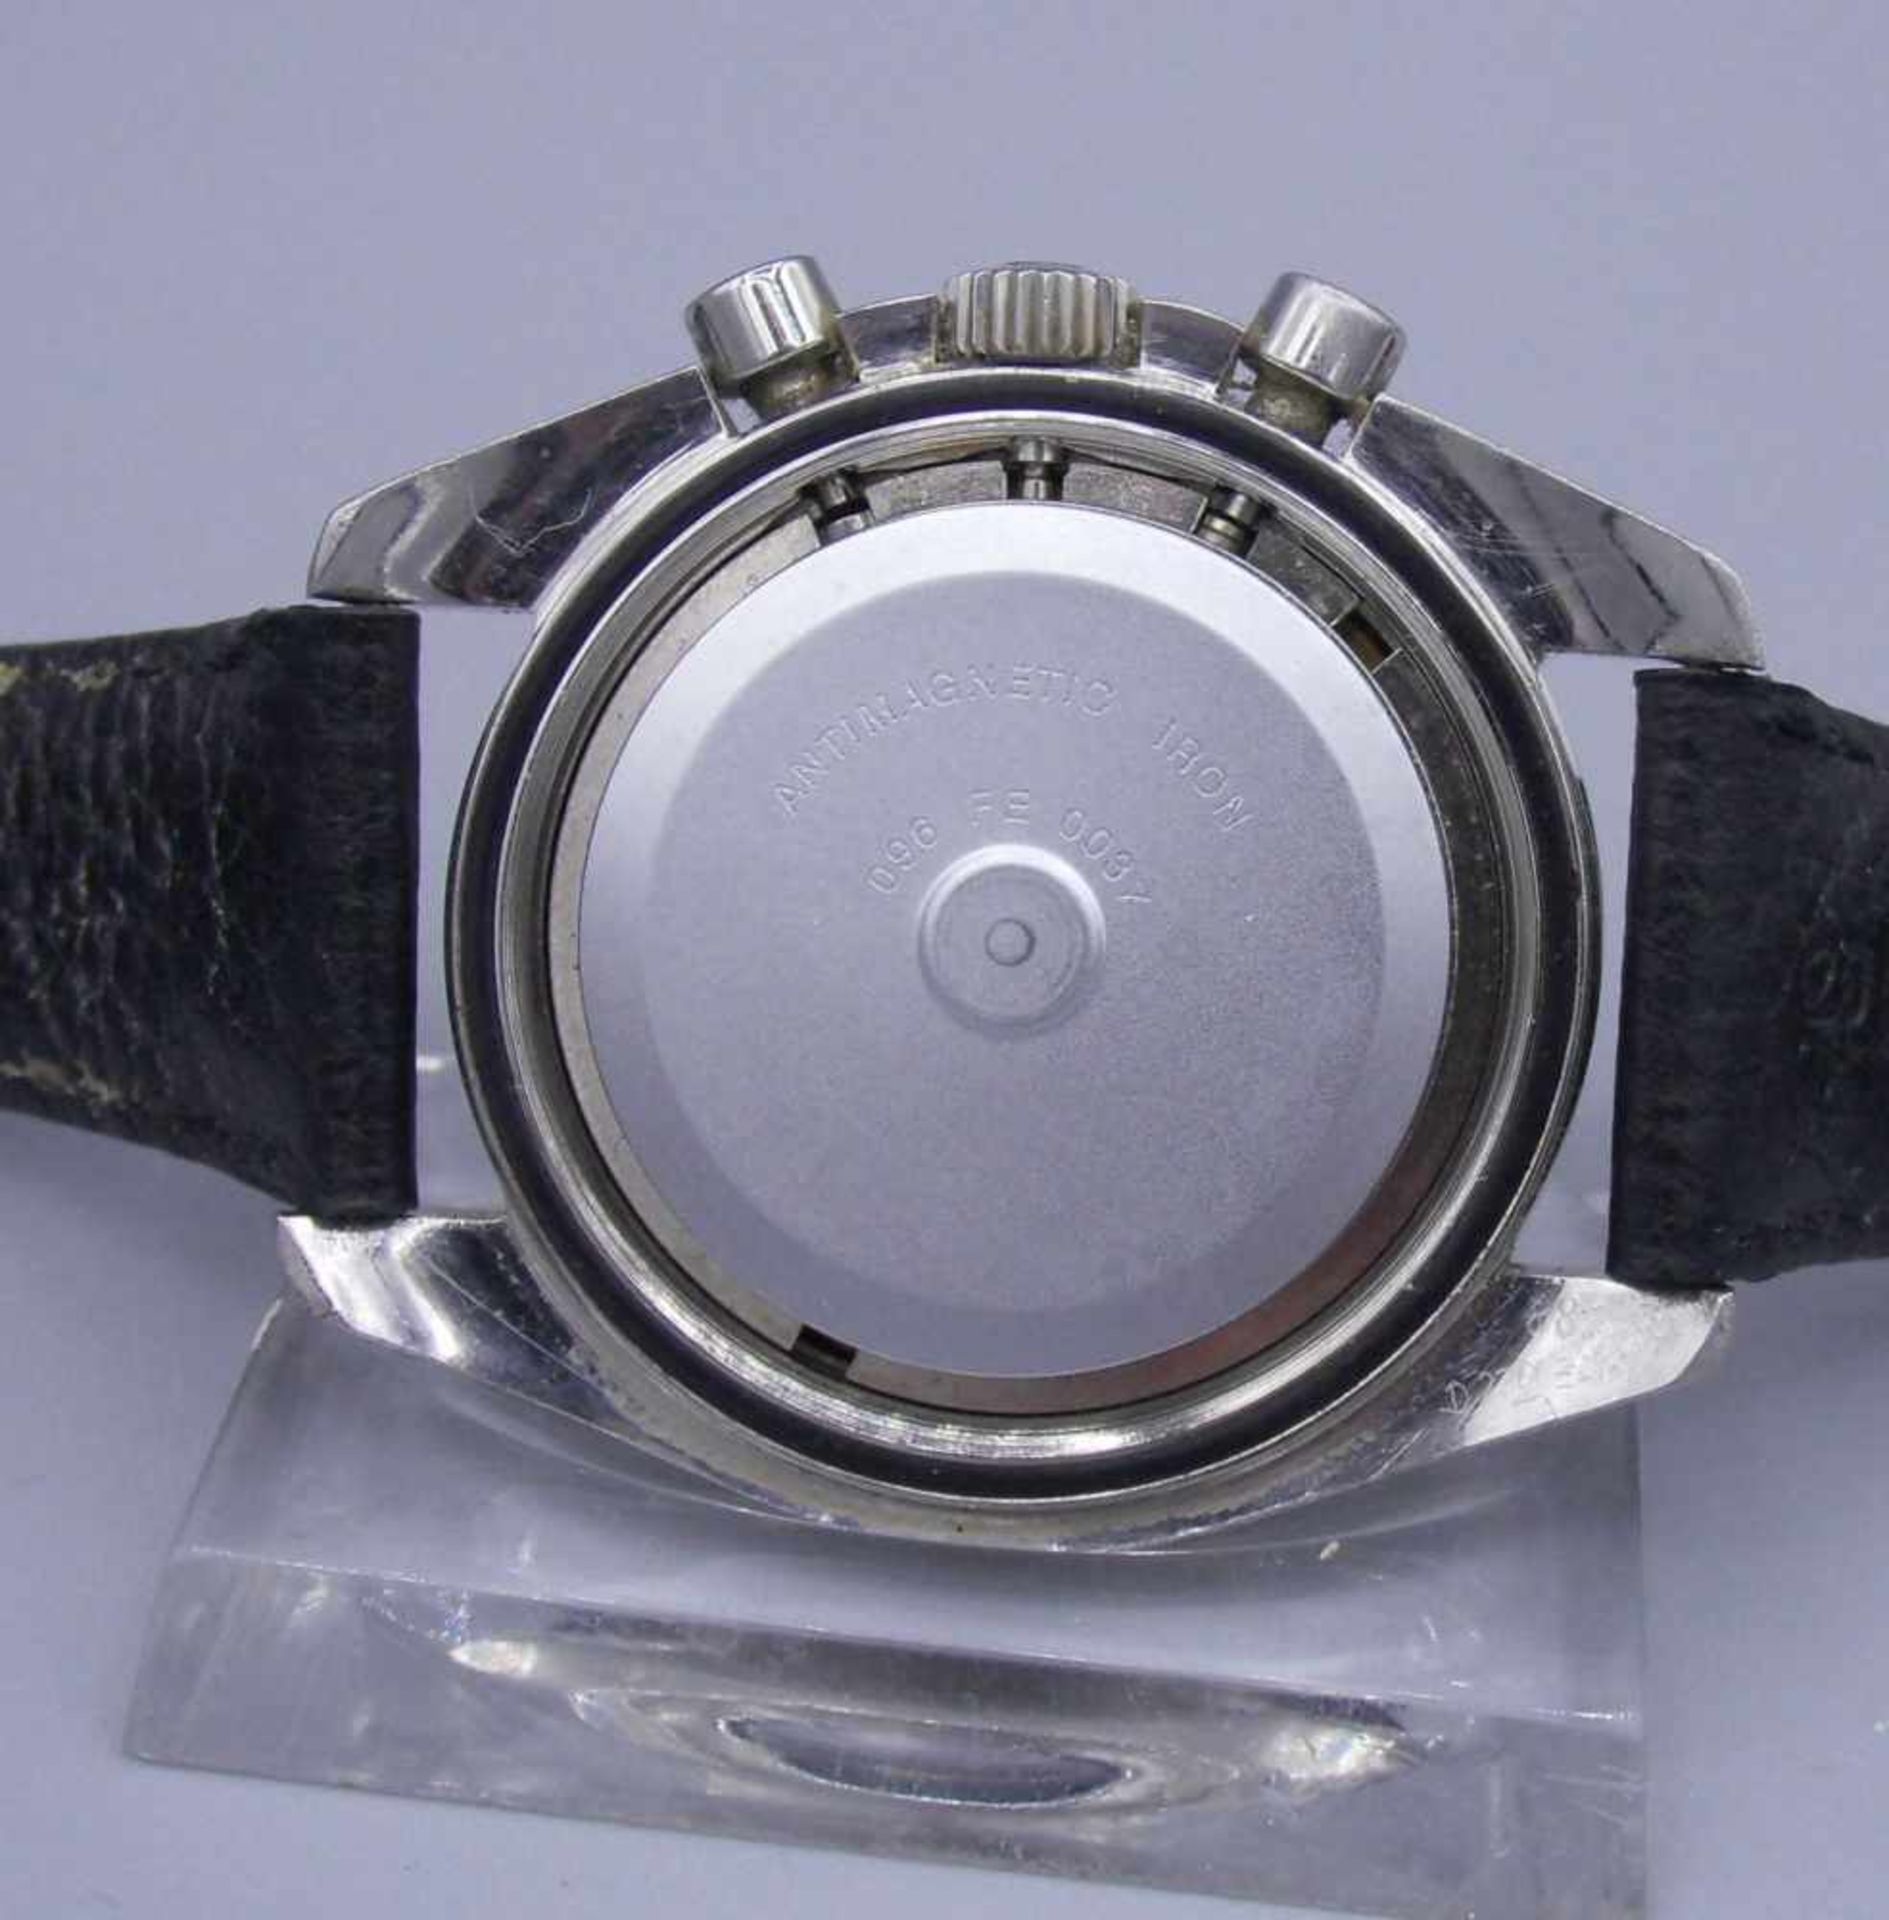 VINTAGE ARMBANDUHR / CHRONOGRAPH: OMEGA SPEEDMASTER PFROFESSIONAL - "MOONWATCH" / wristwatch, - Image 8 of 10